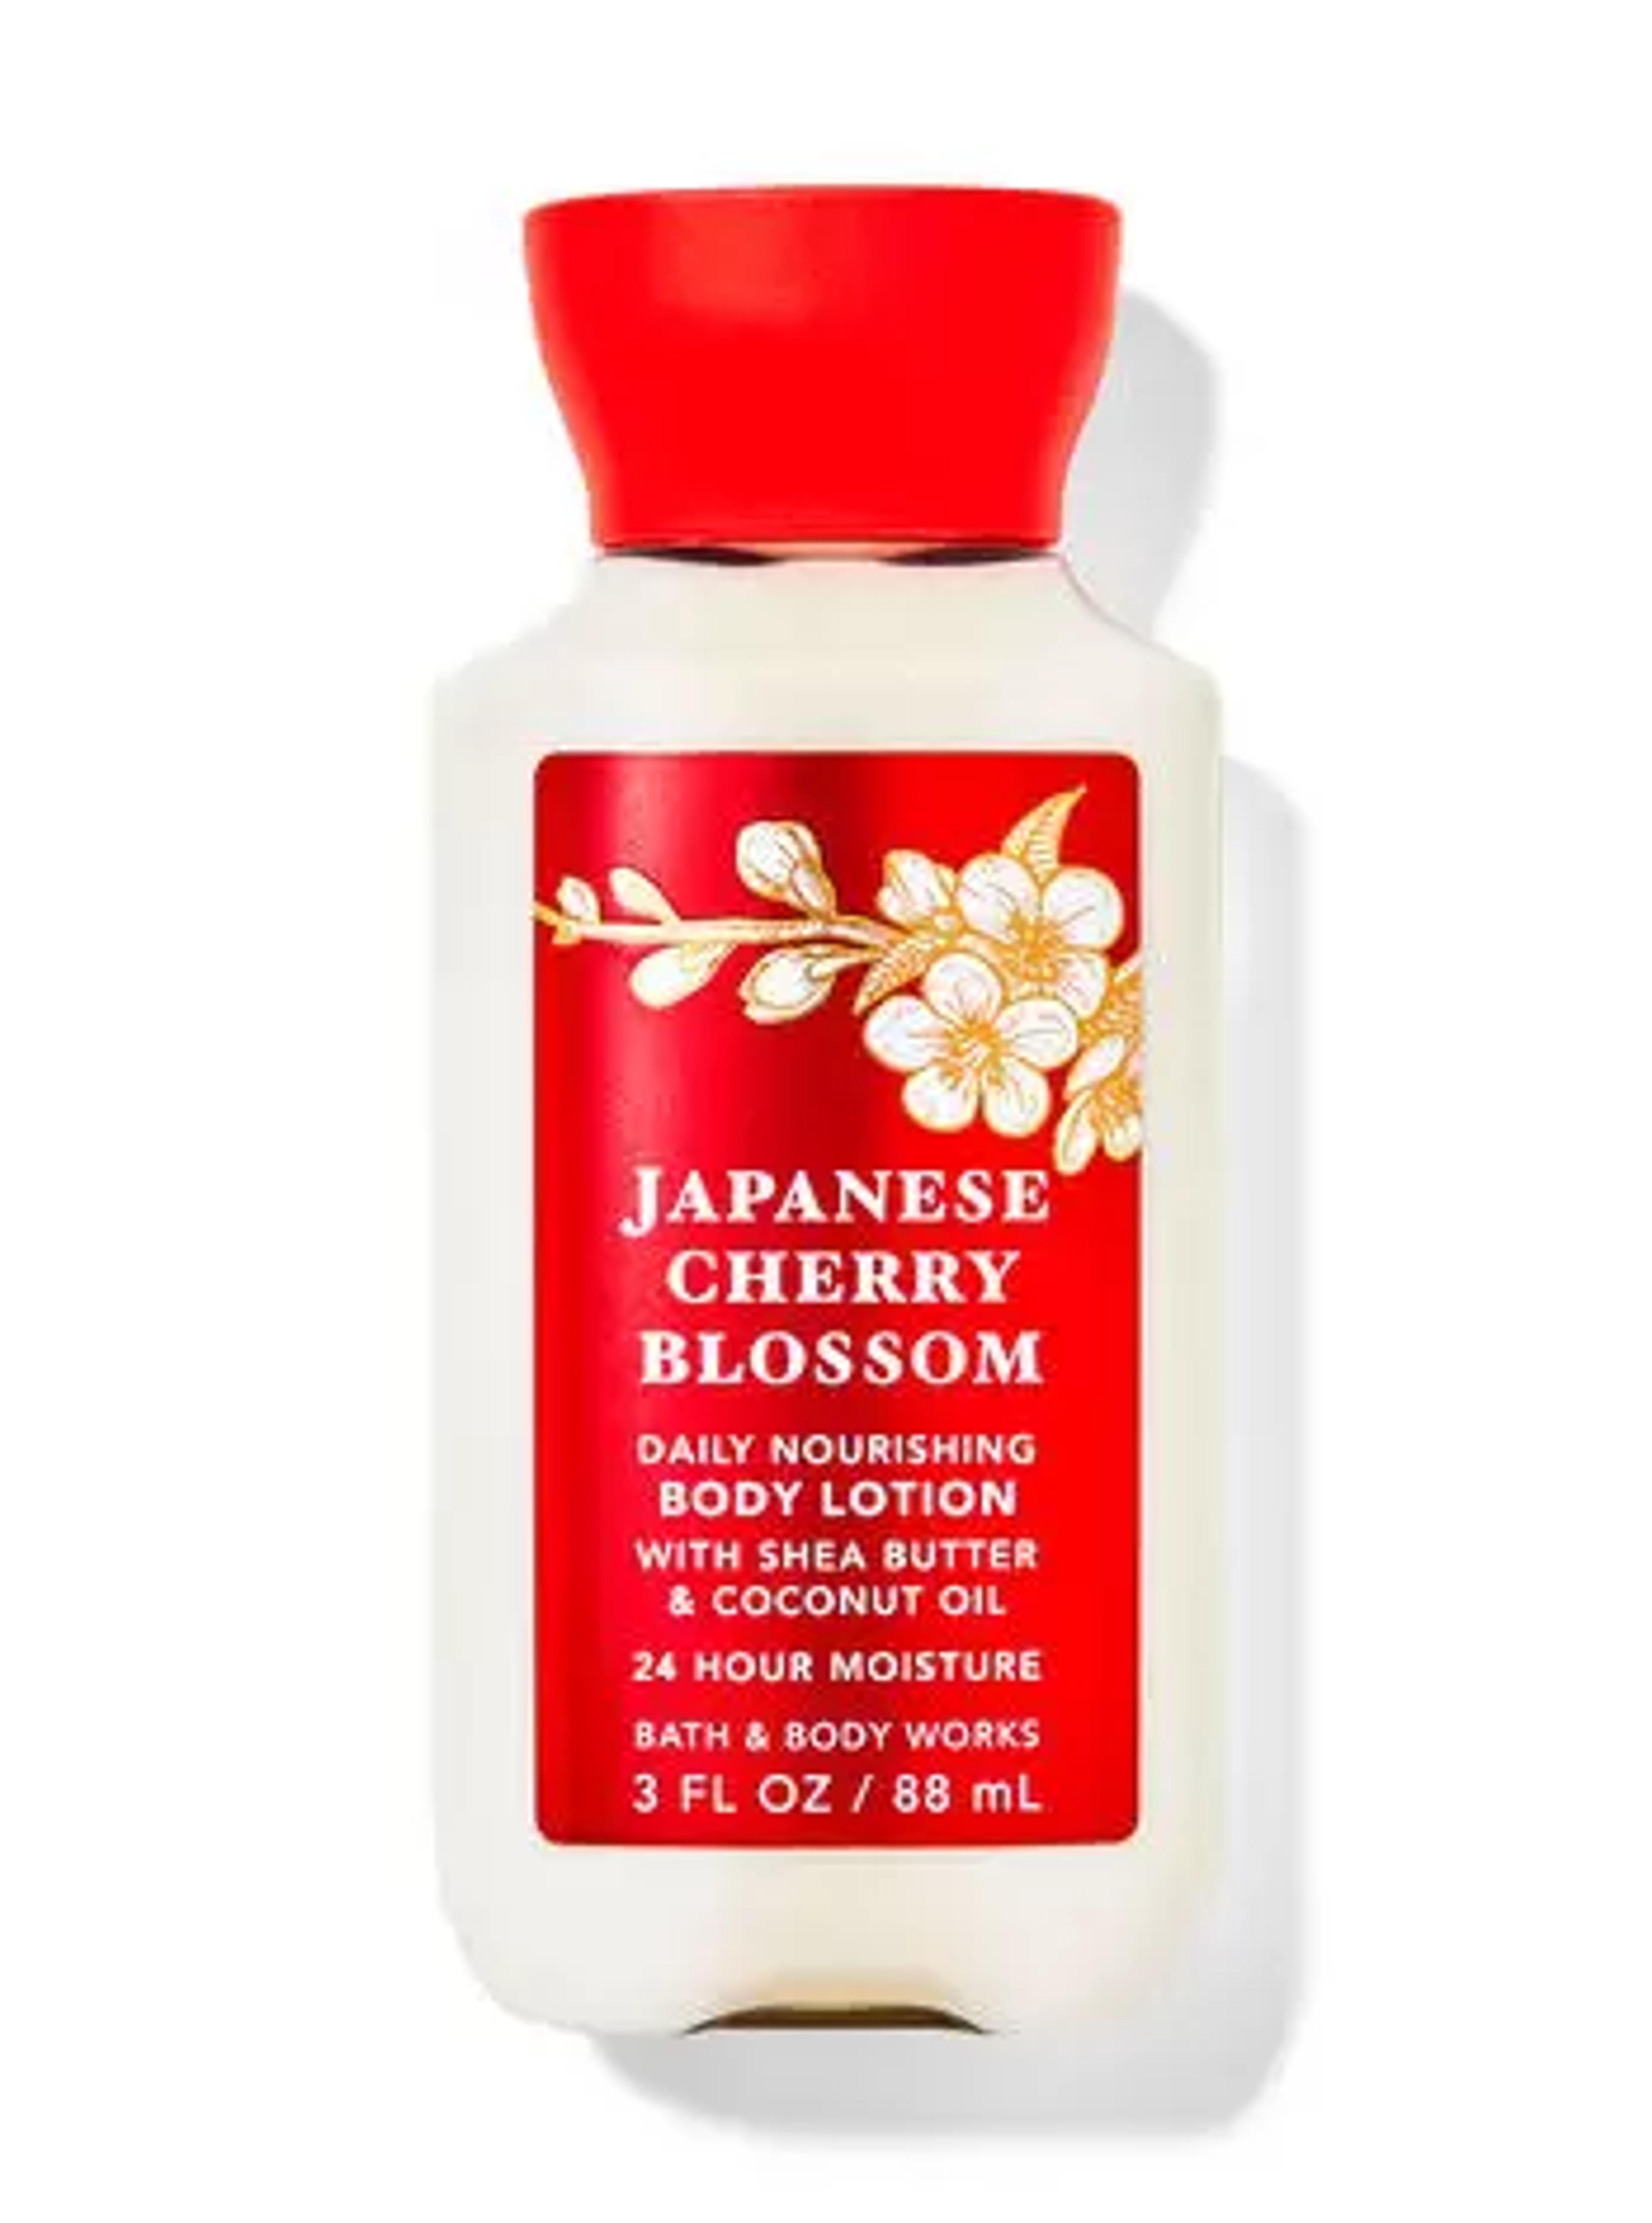 Japanese Cherry Blossom Travel Size Daily Nourishing Body Lotion | Bath & Body Works